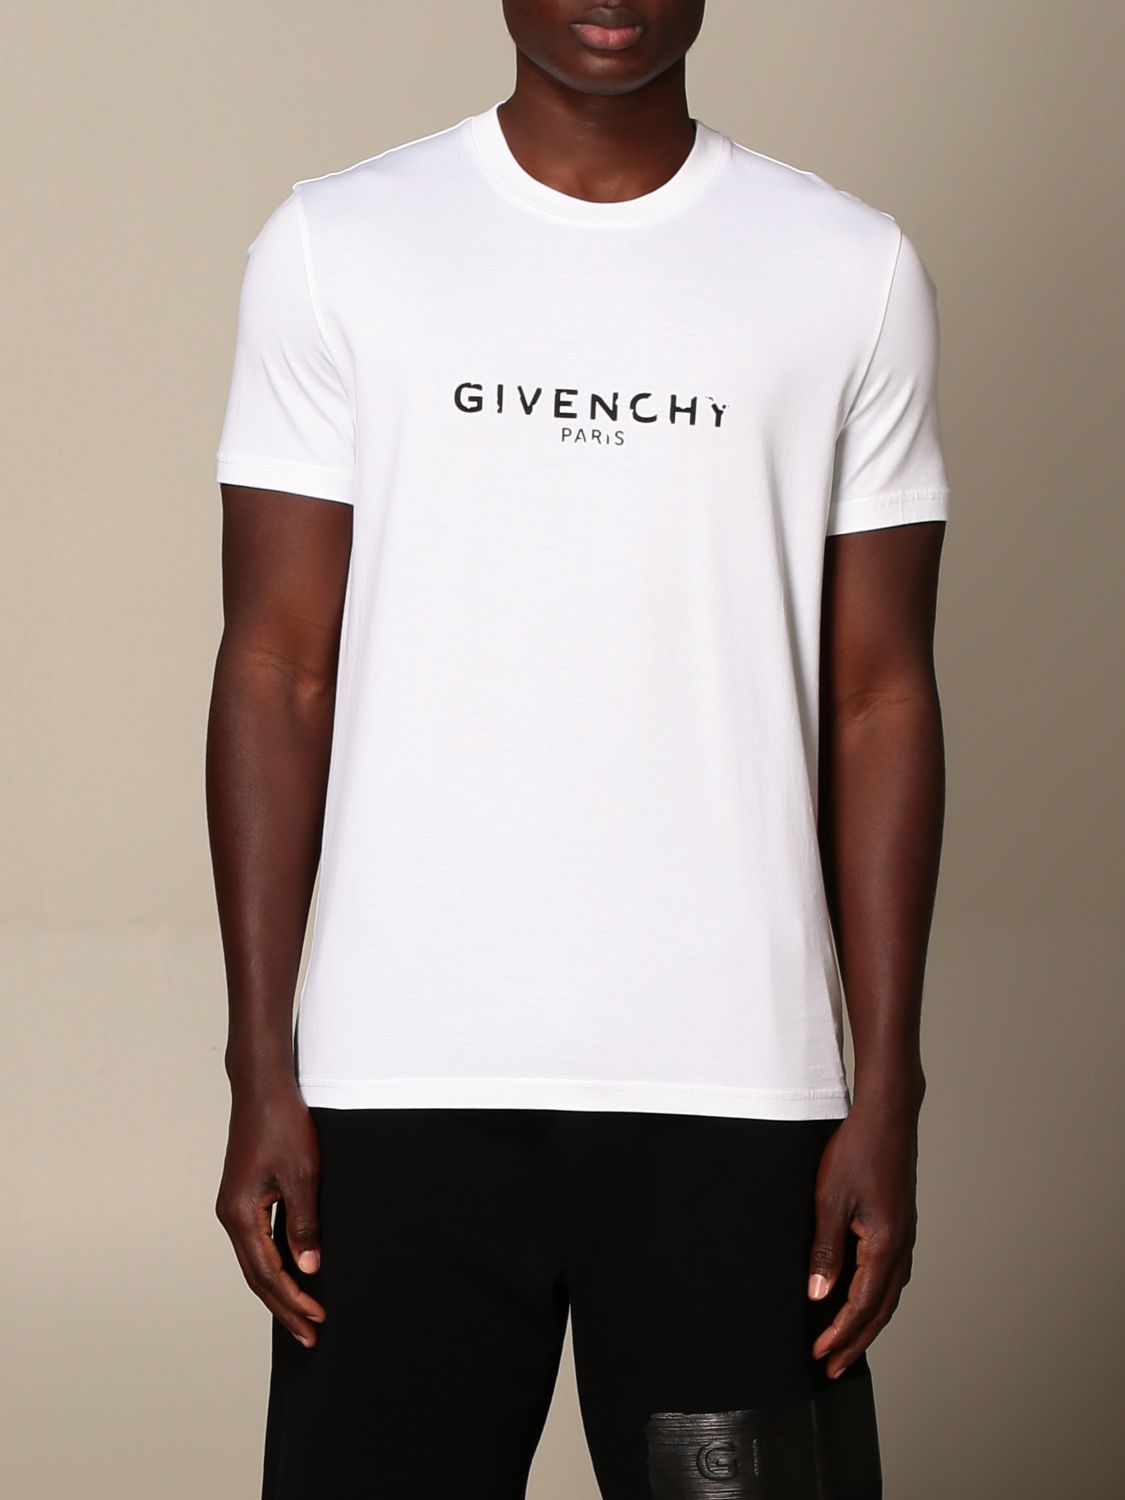 GIVENCHY: T-shirt with logo - White | GIVENCHY t-shirt BM70K93002 ...